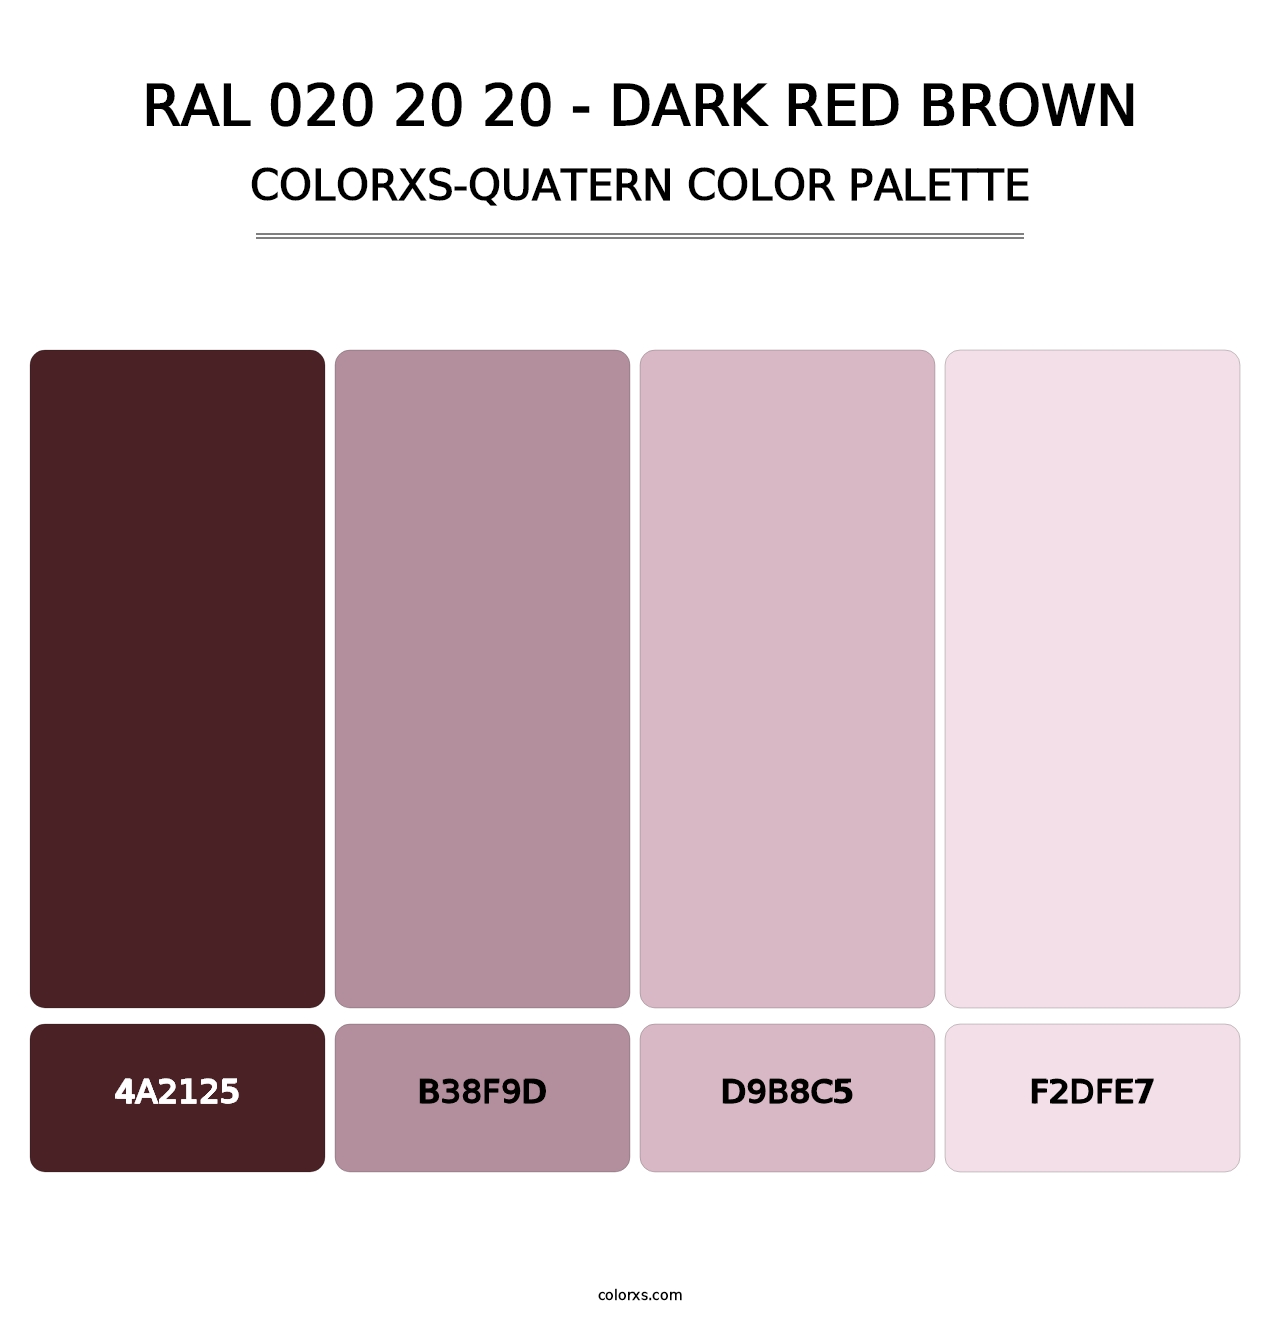 RAL 020 20 20 - Dark Red Brown - Colorxs Quatern Palette